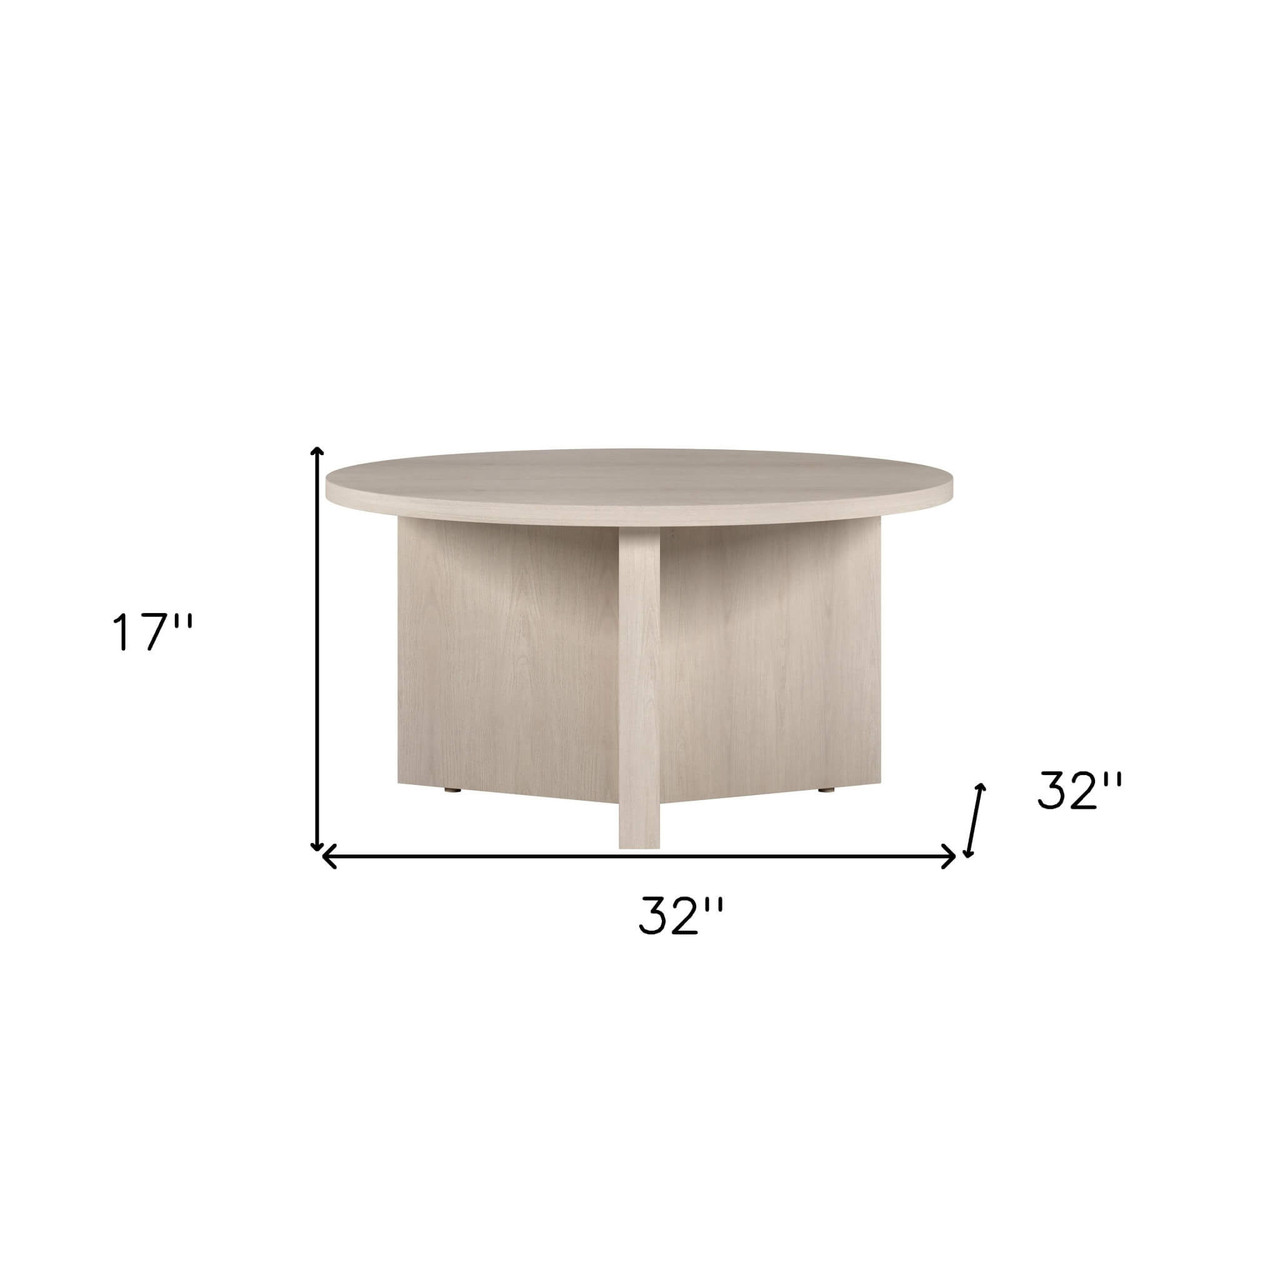 32" White Round Coffee Table